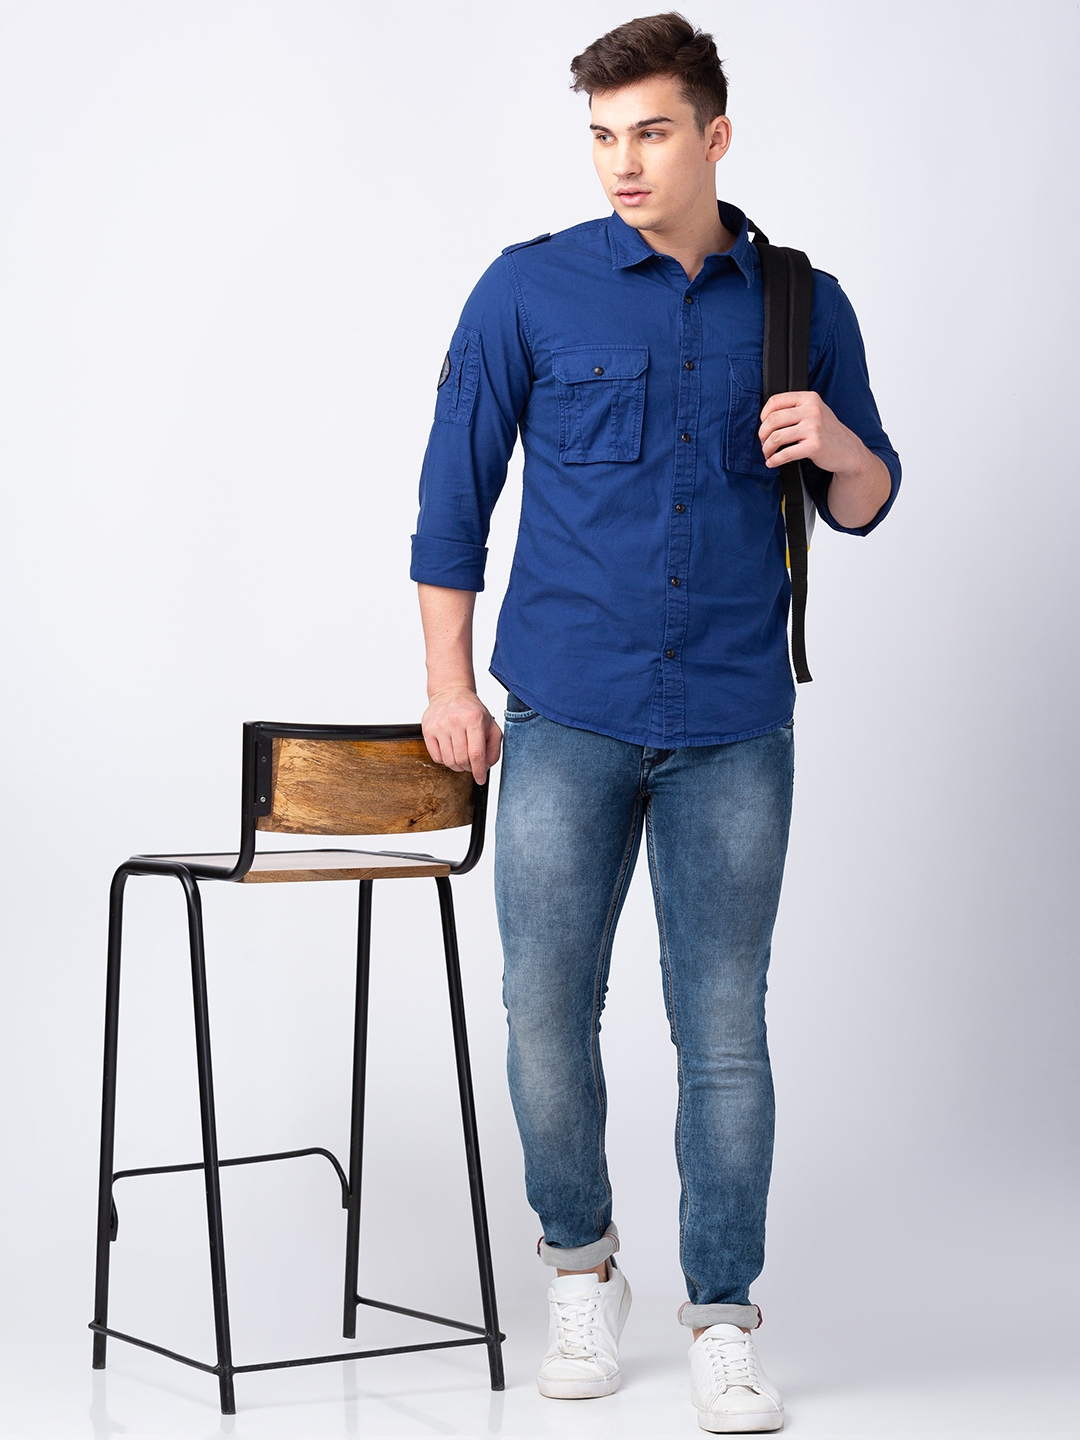 Spykar | Men's Blue Cotton Solid Casual Shirts 5